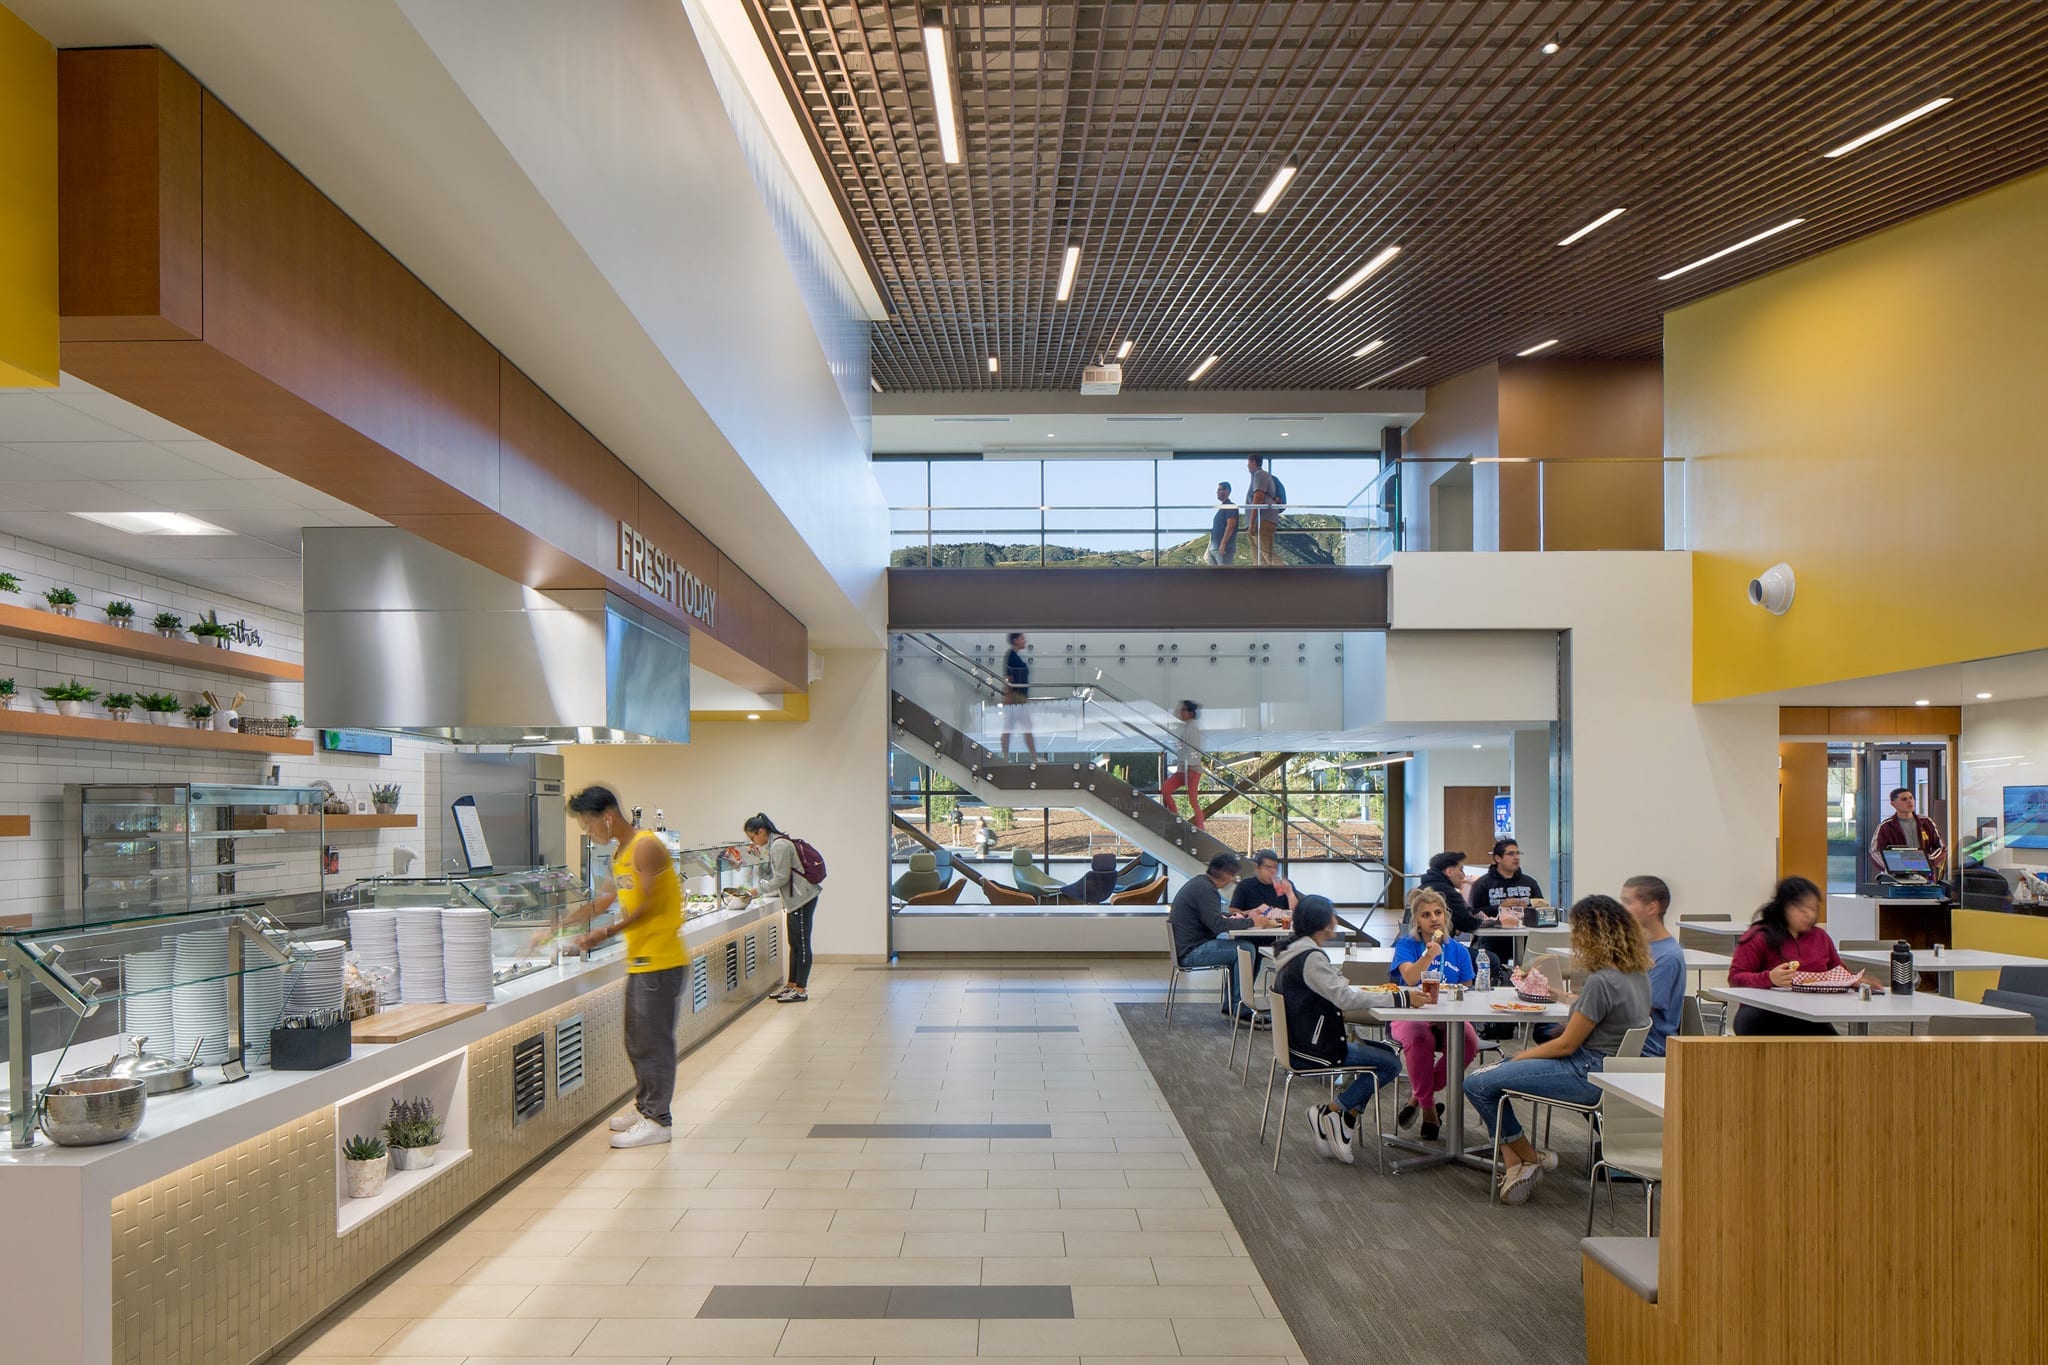 CSU San Bernardino cafeteria with self-serve counter and seating.